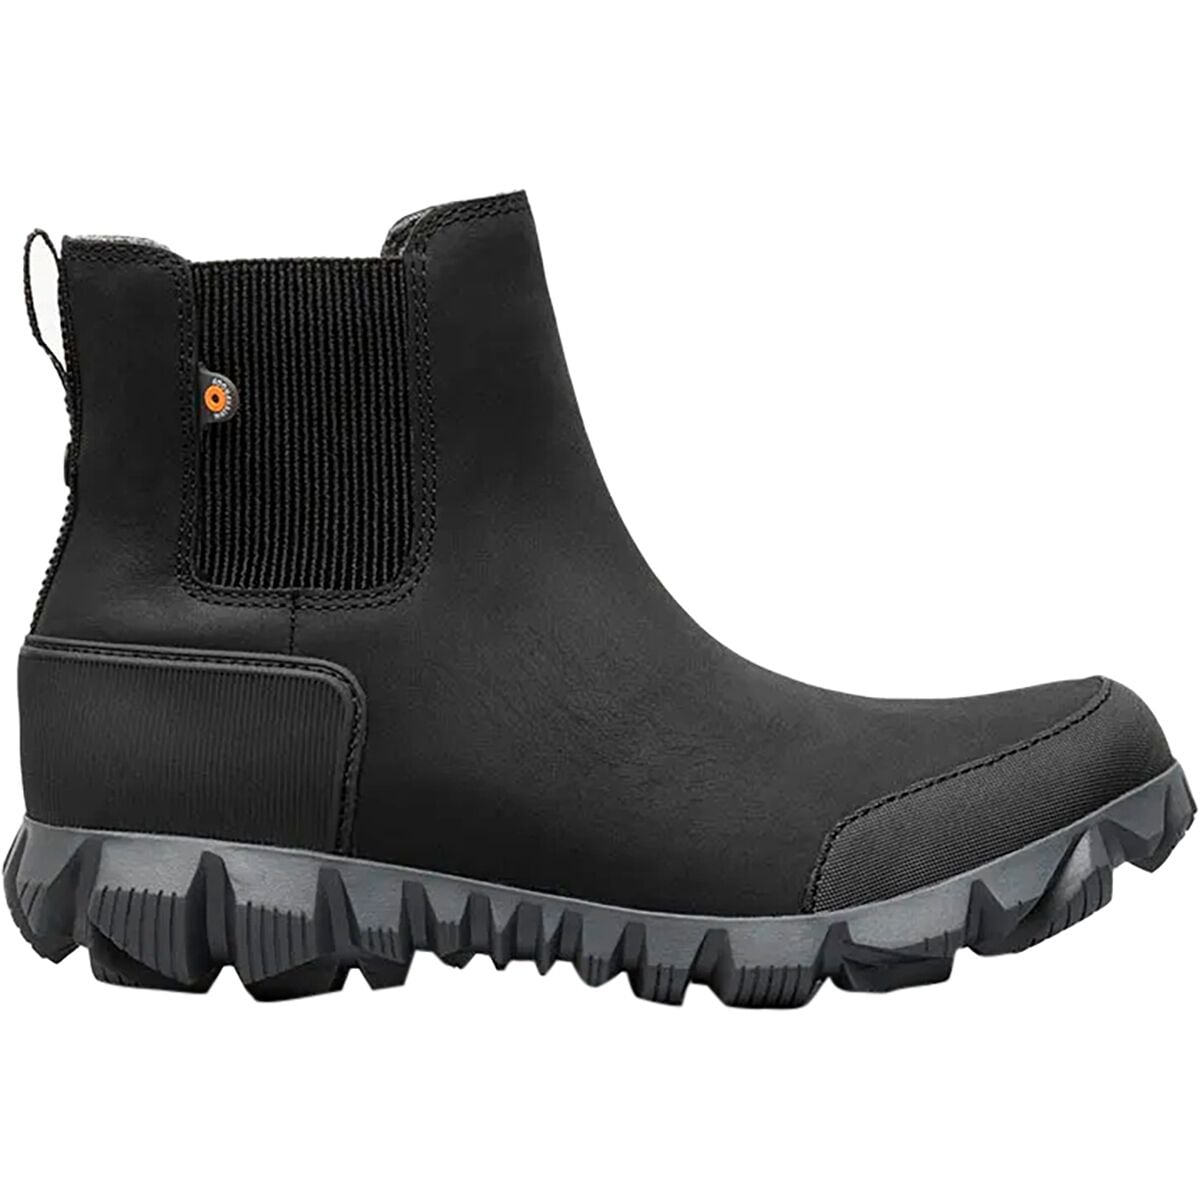 Arcata Urban Leather Chelsea Boot - Women